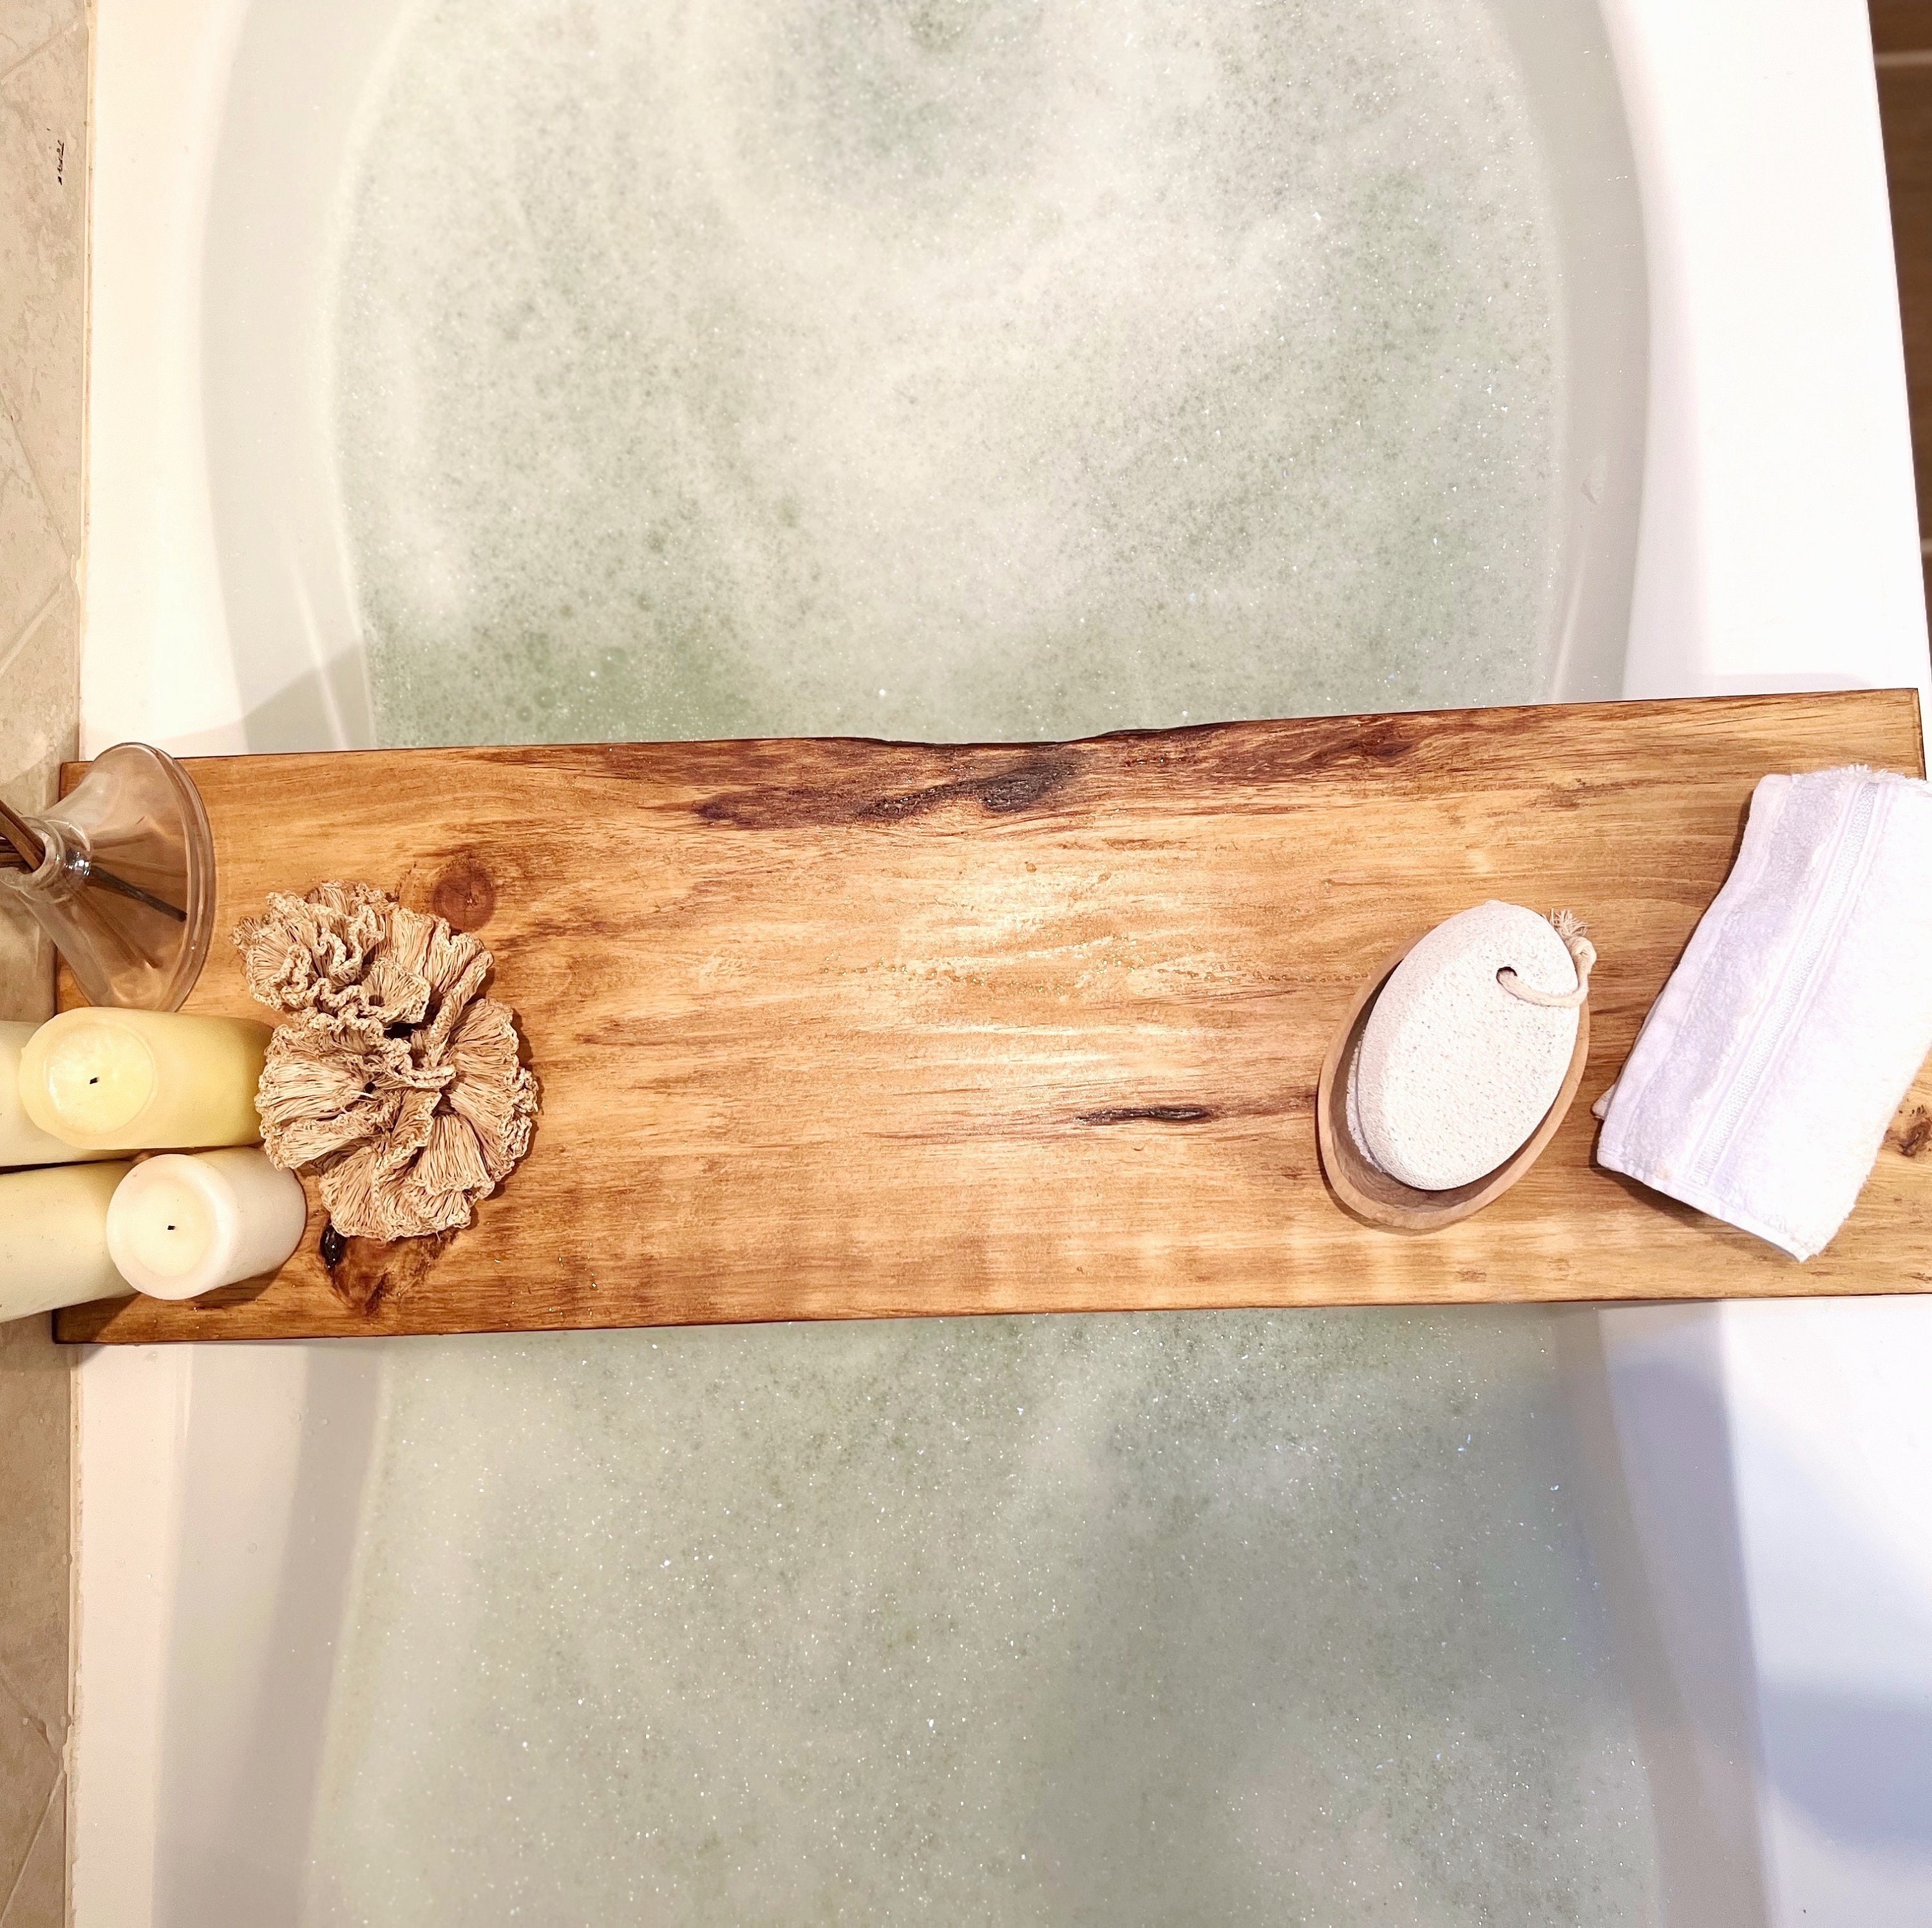 Over on eHow: DIY Reclaimed Wood Bath Caddy